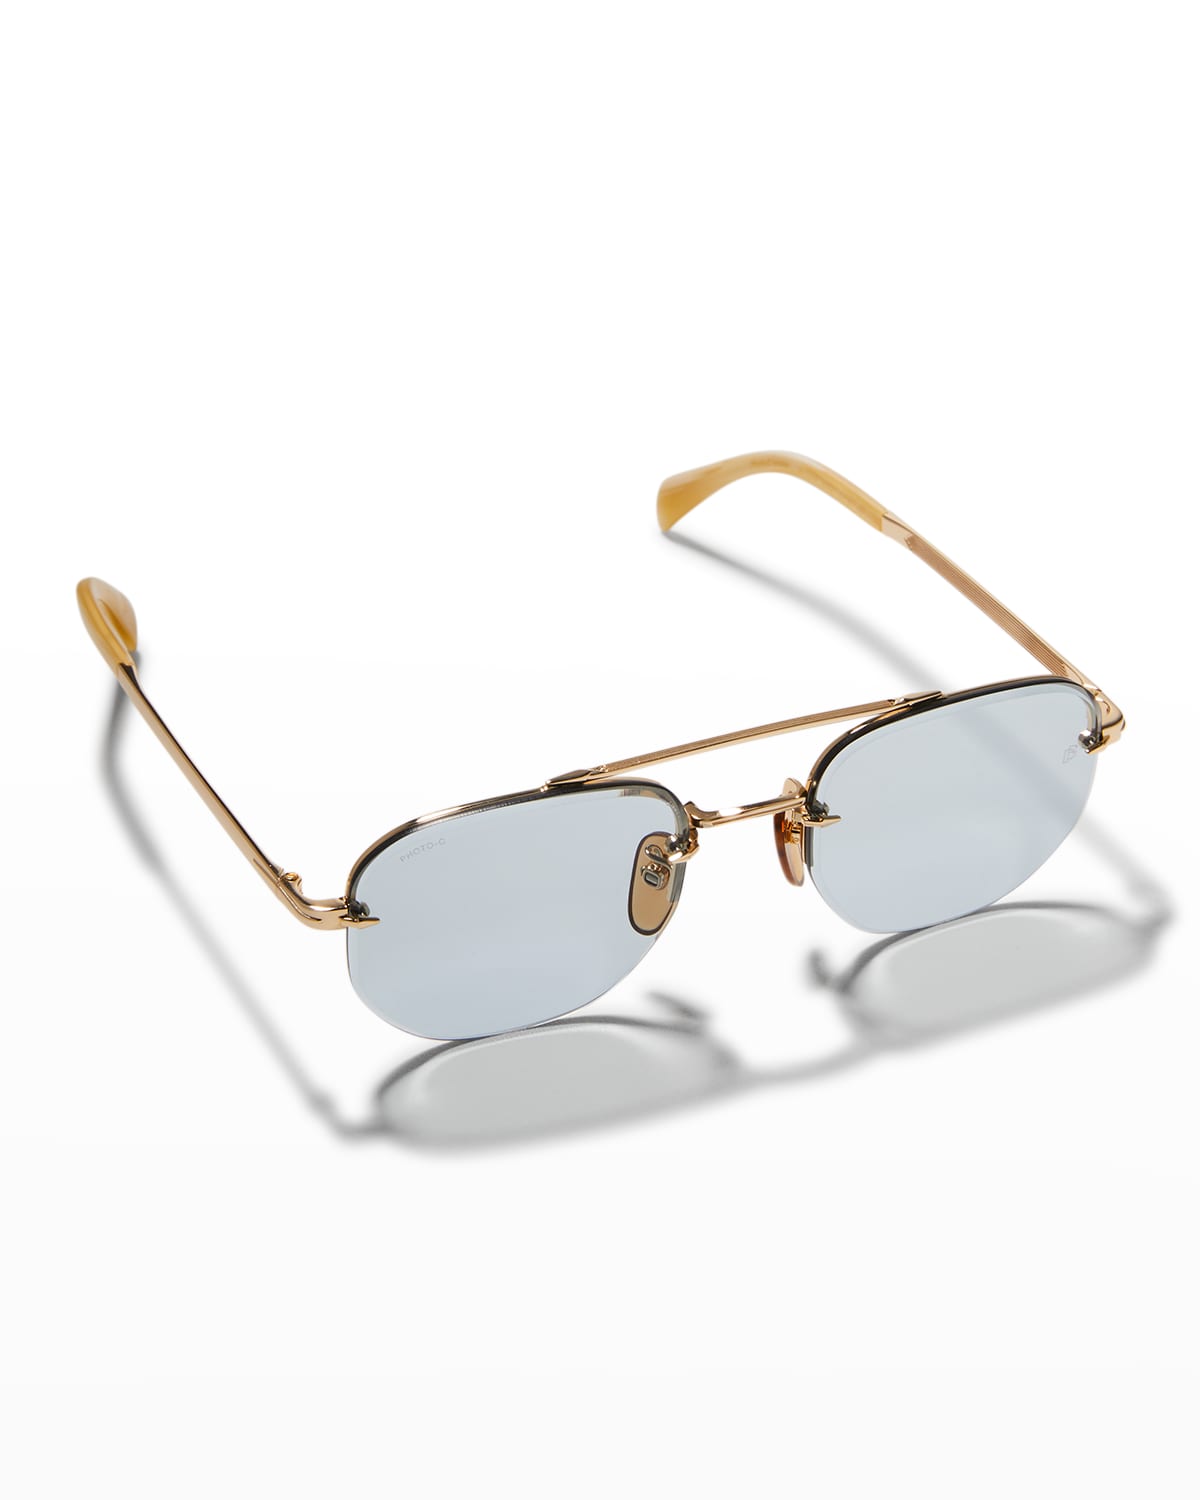 David Beckham Men's Photochromic Lens Square Sunglasses